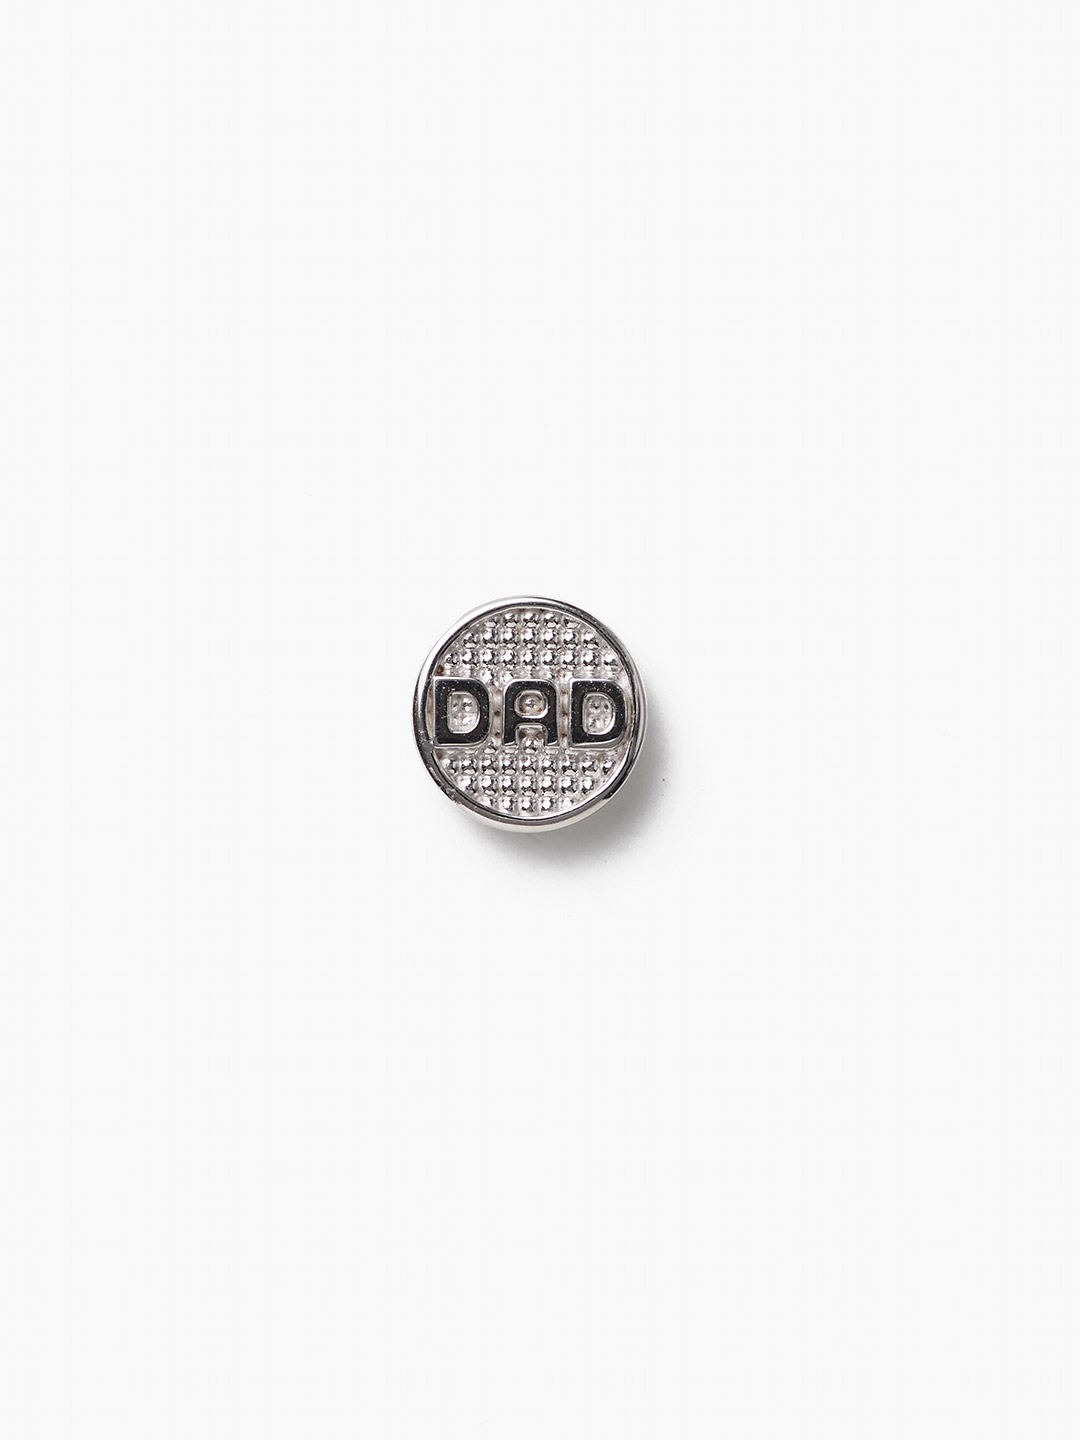 Dad Coin Silver - Silver